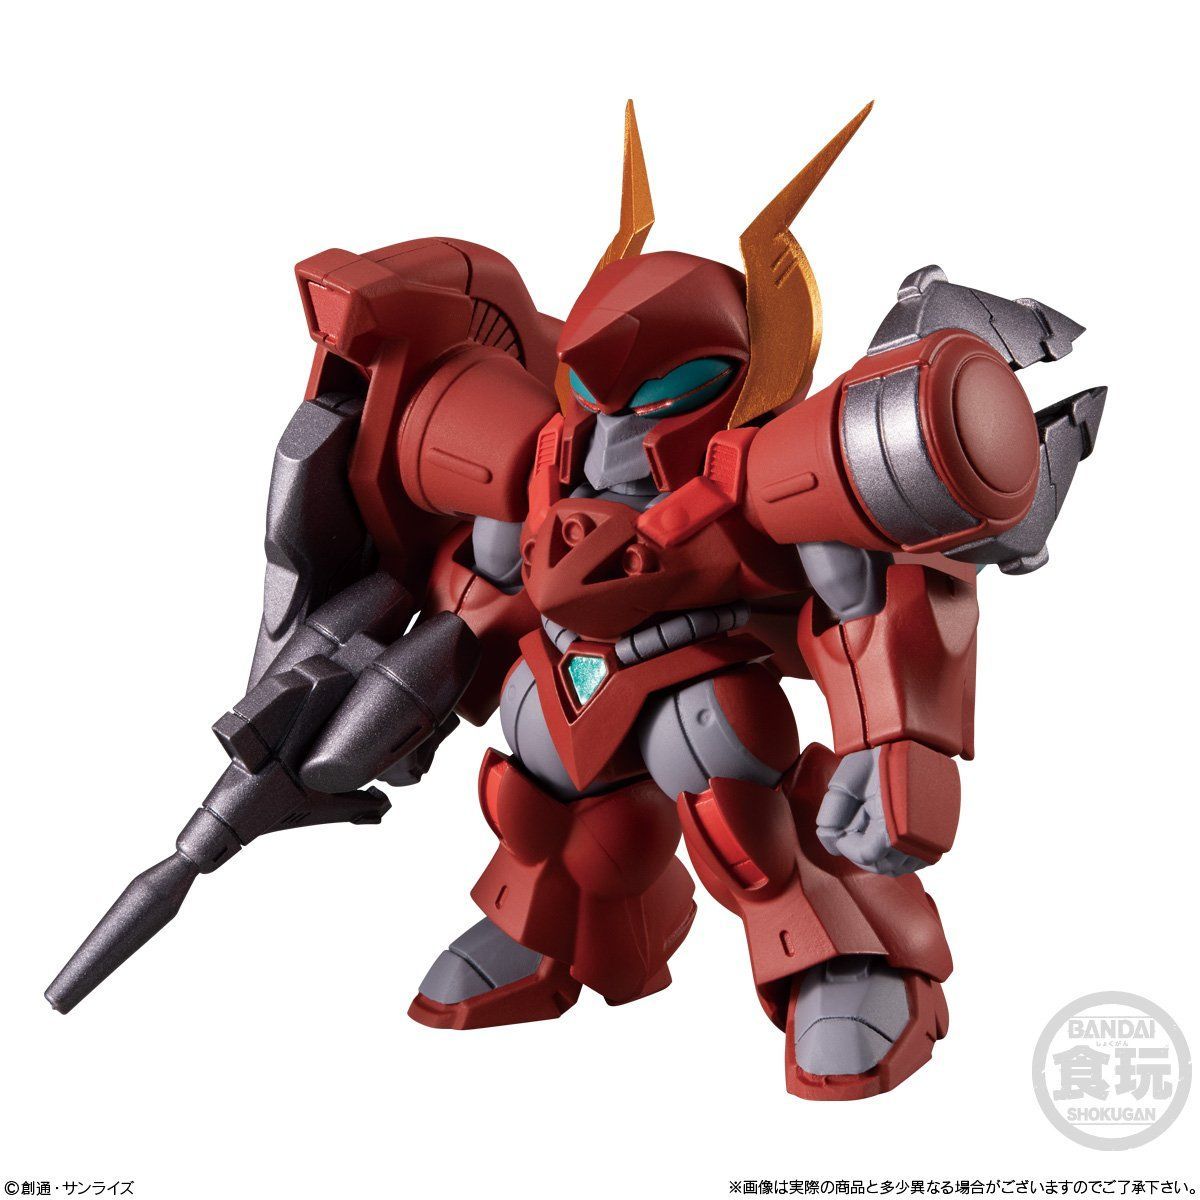 FW Gundam Converge Sharp Plus 01